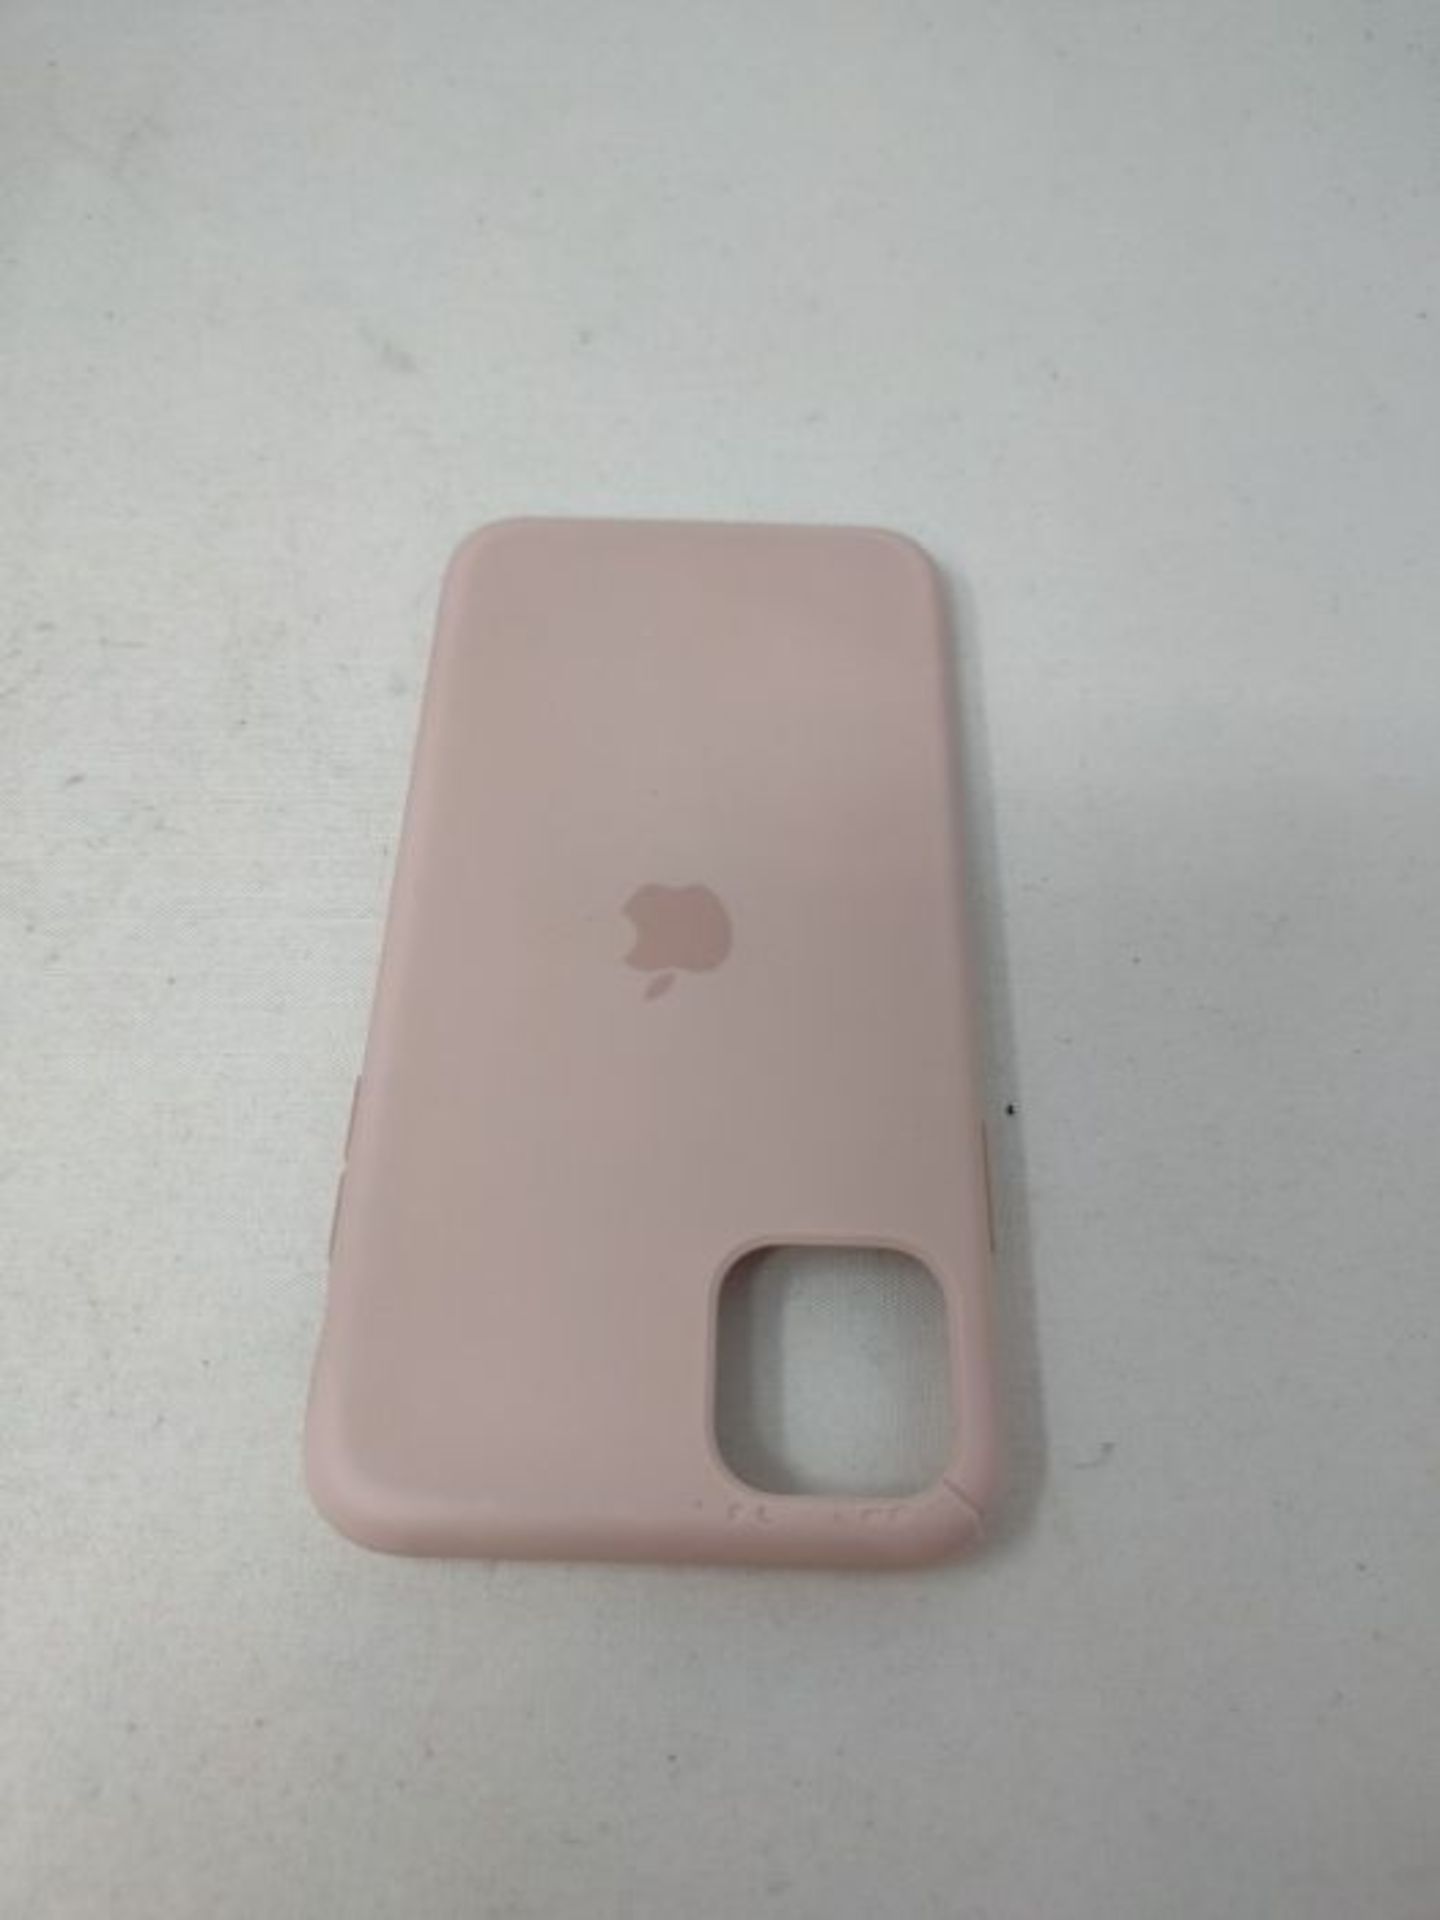 [CRACKED] Apple Silikon Case (fÃ¼r iPhone 11 Pro Max) - Sandrosa - 6.5 Zoll - Image 2 of 2